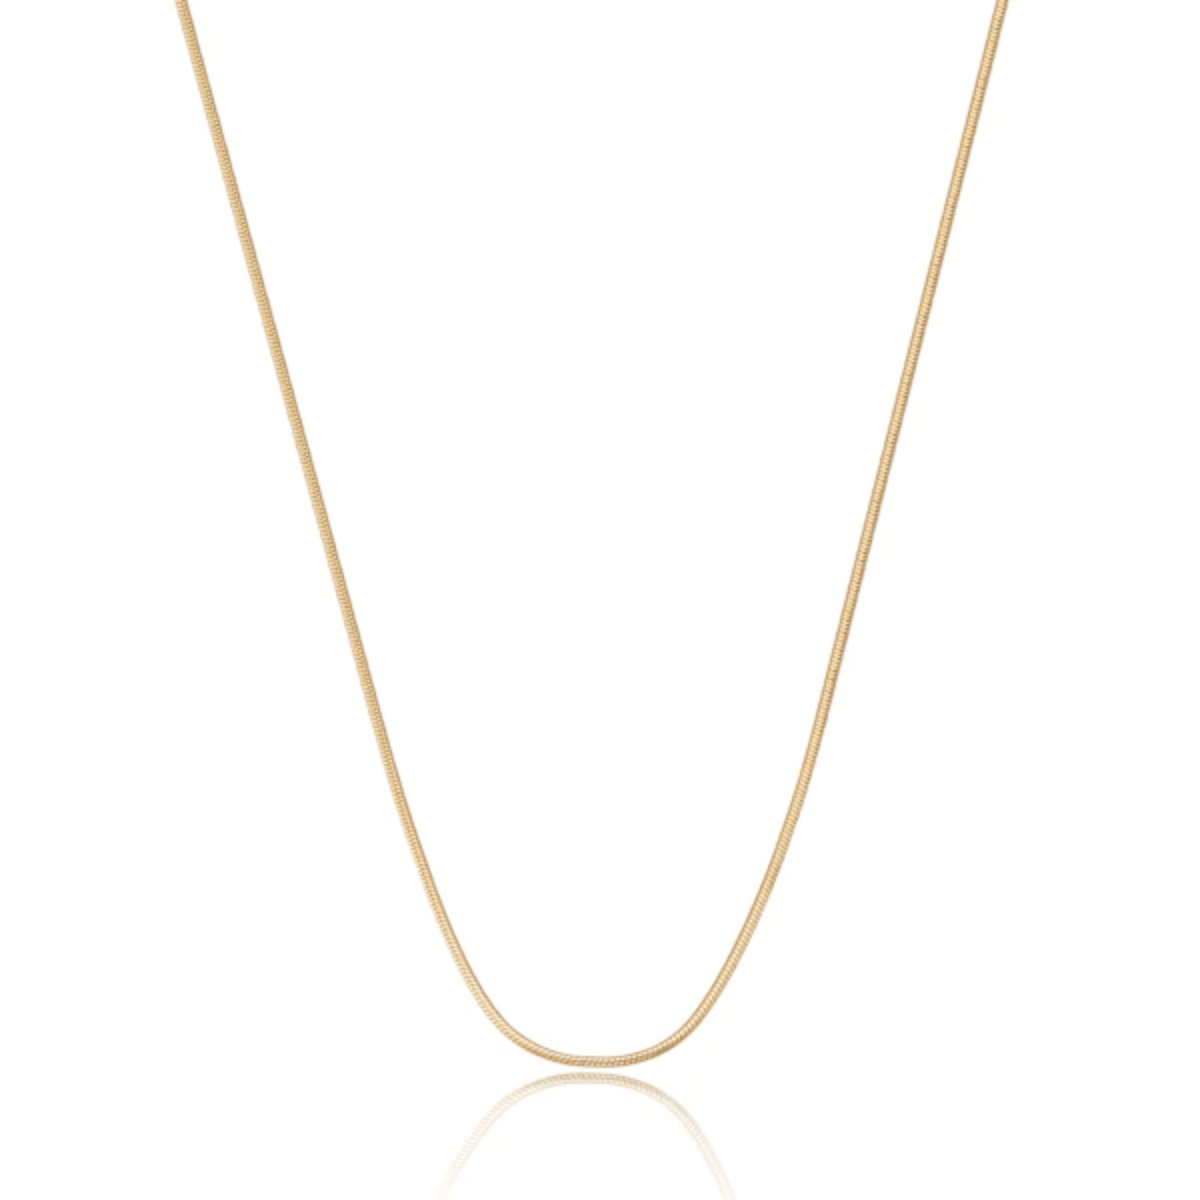 18k Gold Thin Herringbone Necklace - The Smart Minimalist